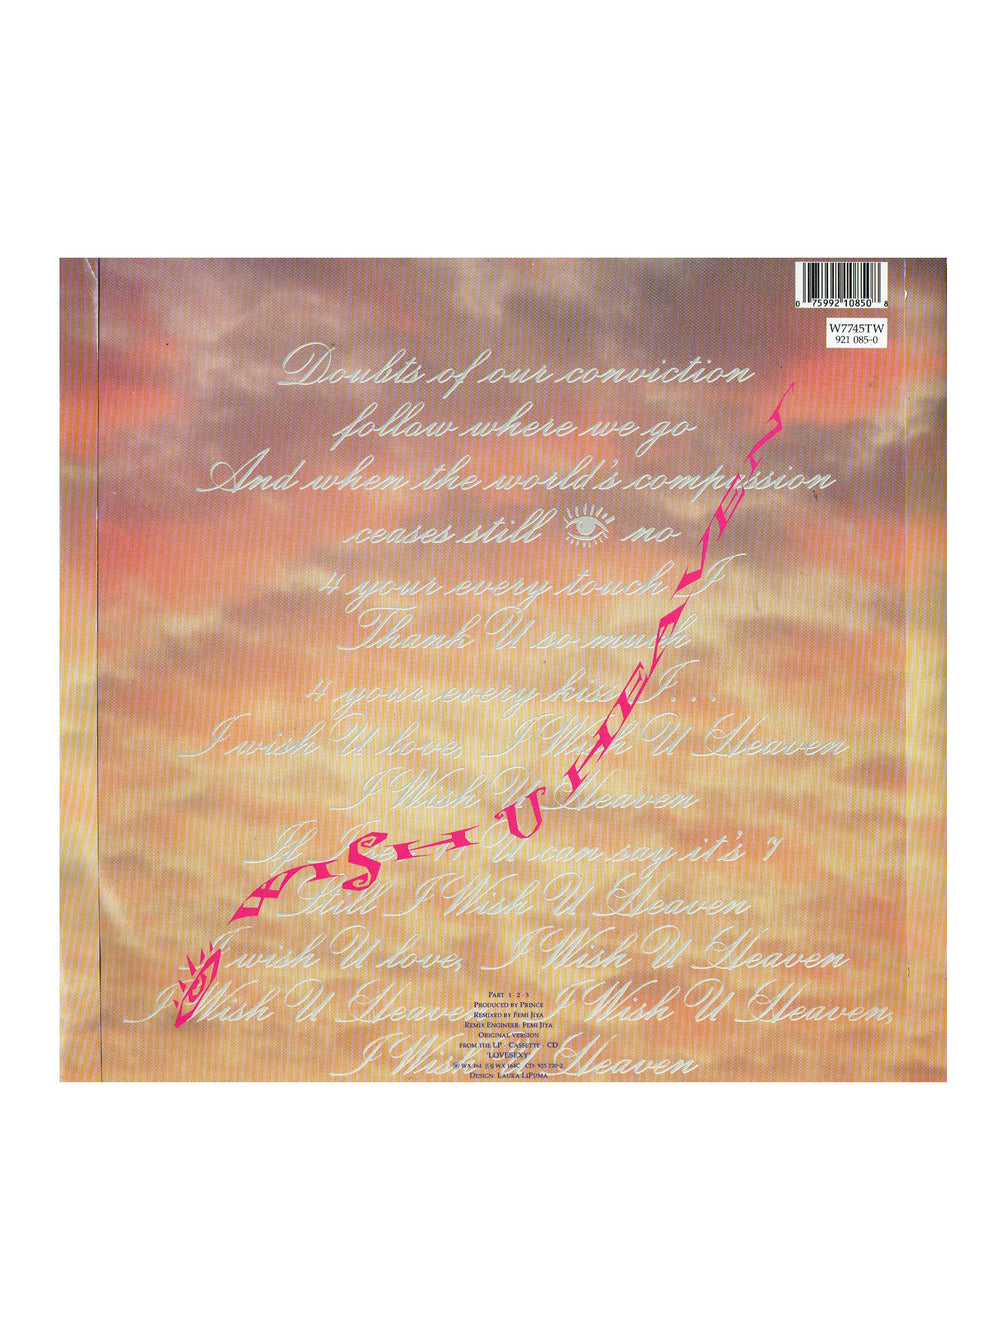 Prince / Camille  I Wish U Heaven UK 12 Inch PS 2 Tracks 1988 UK Original Release SMS